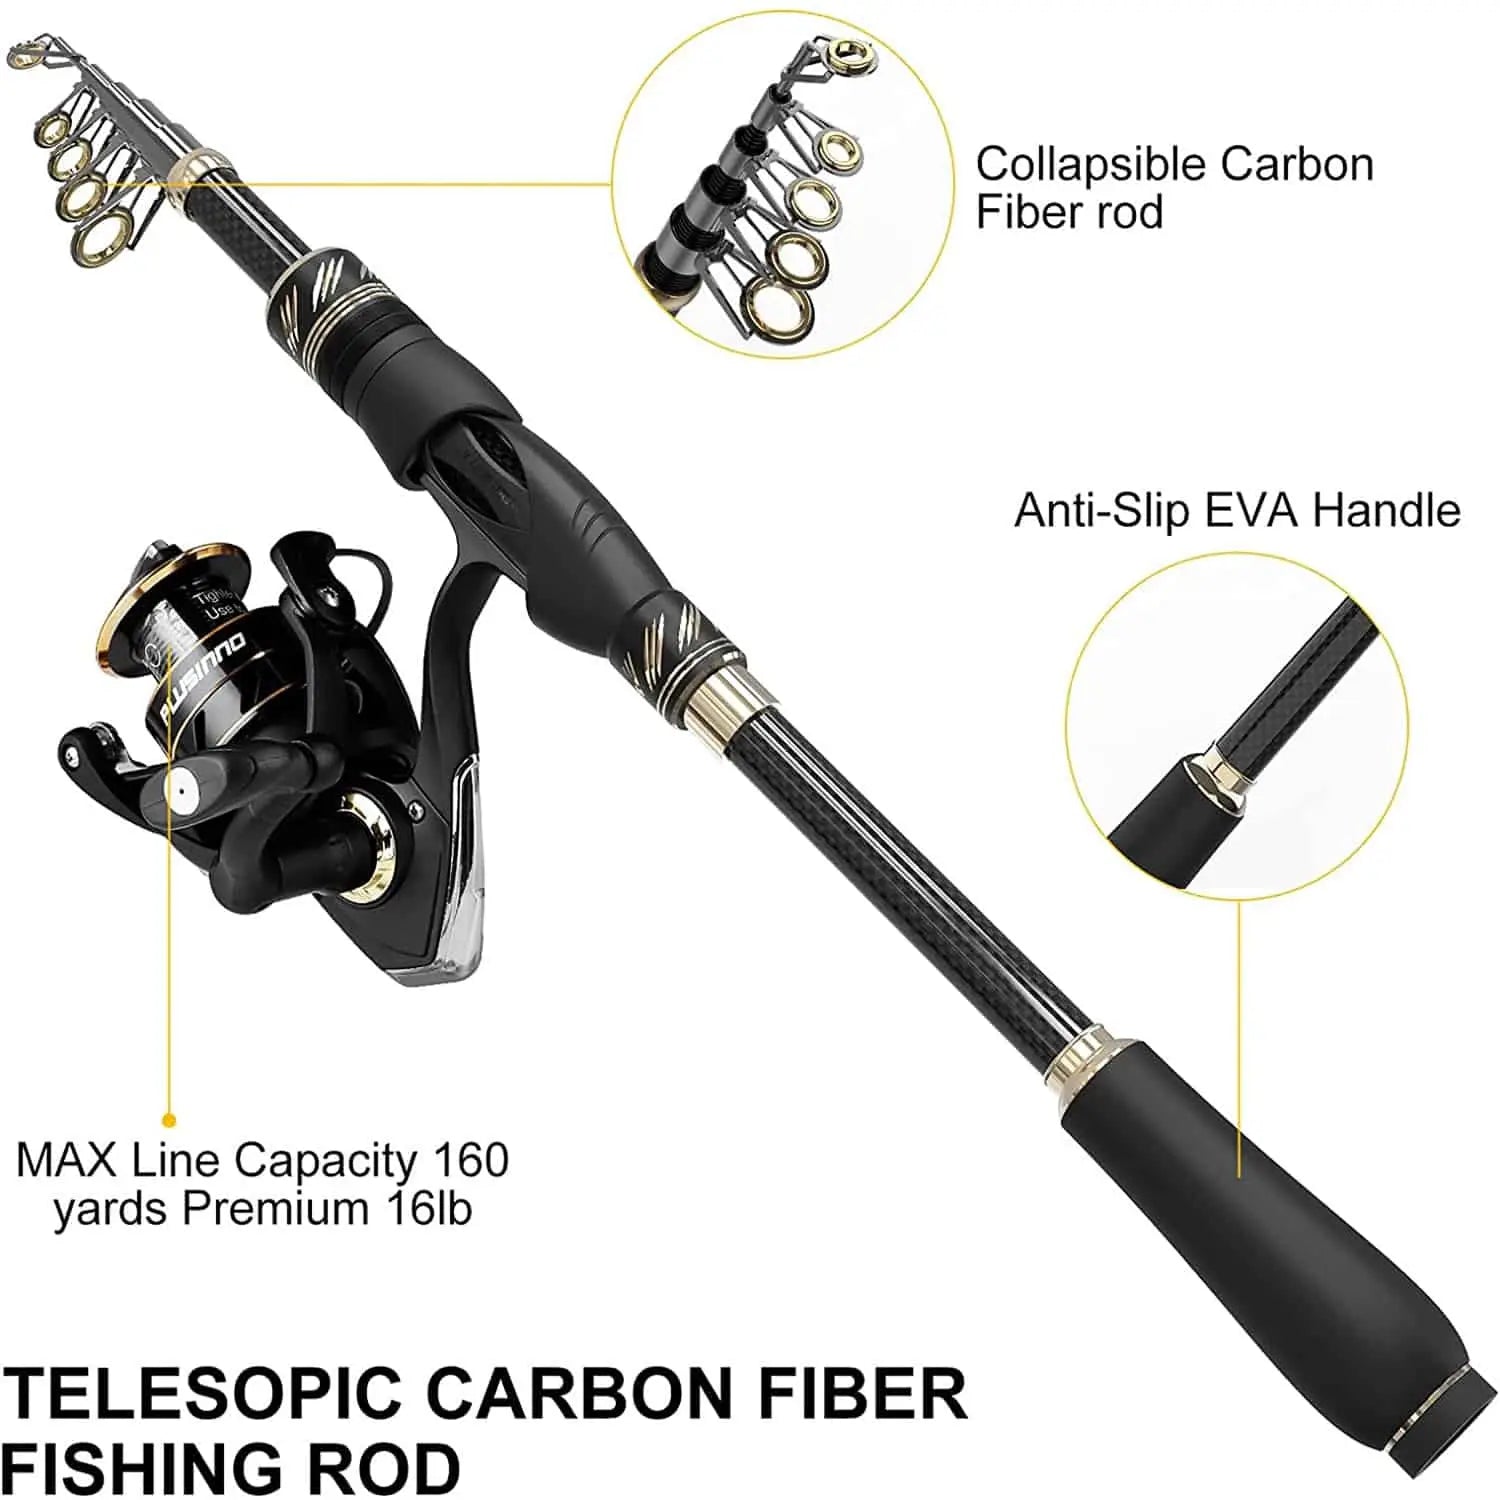 PLUSINNO Fishing Rod and Reel Combo,Fishing Pole,Telescopic